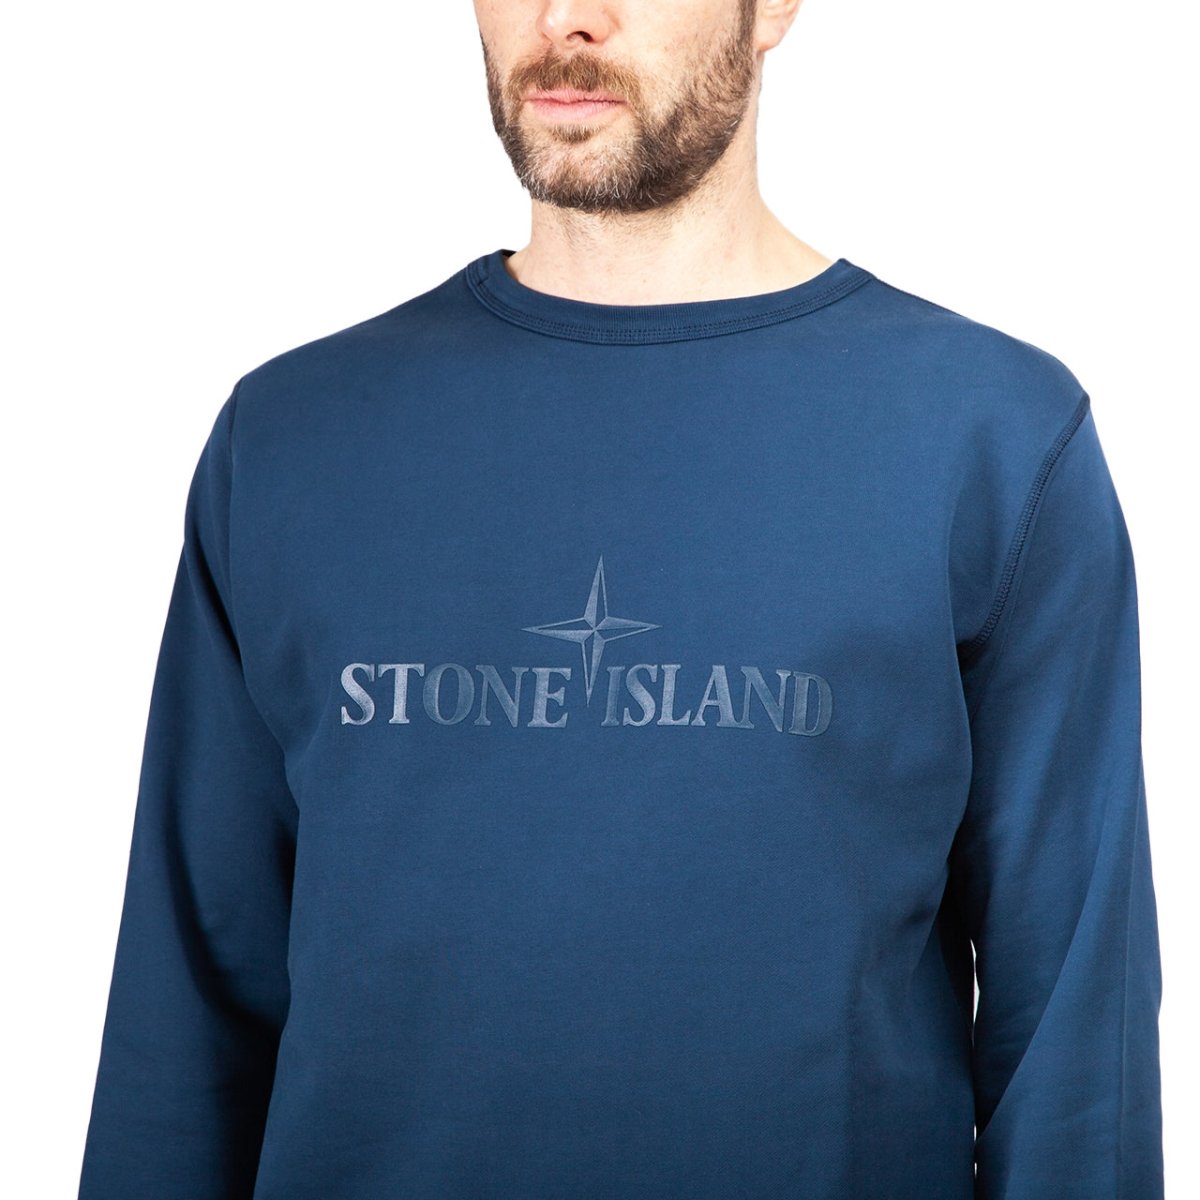 Stone Island Double Front Crewneck (Navy)  - Allike Store